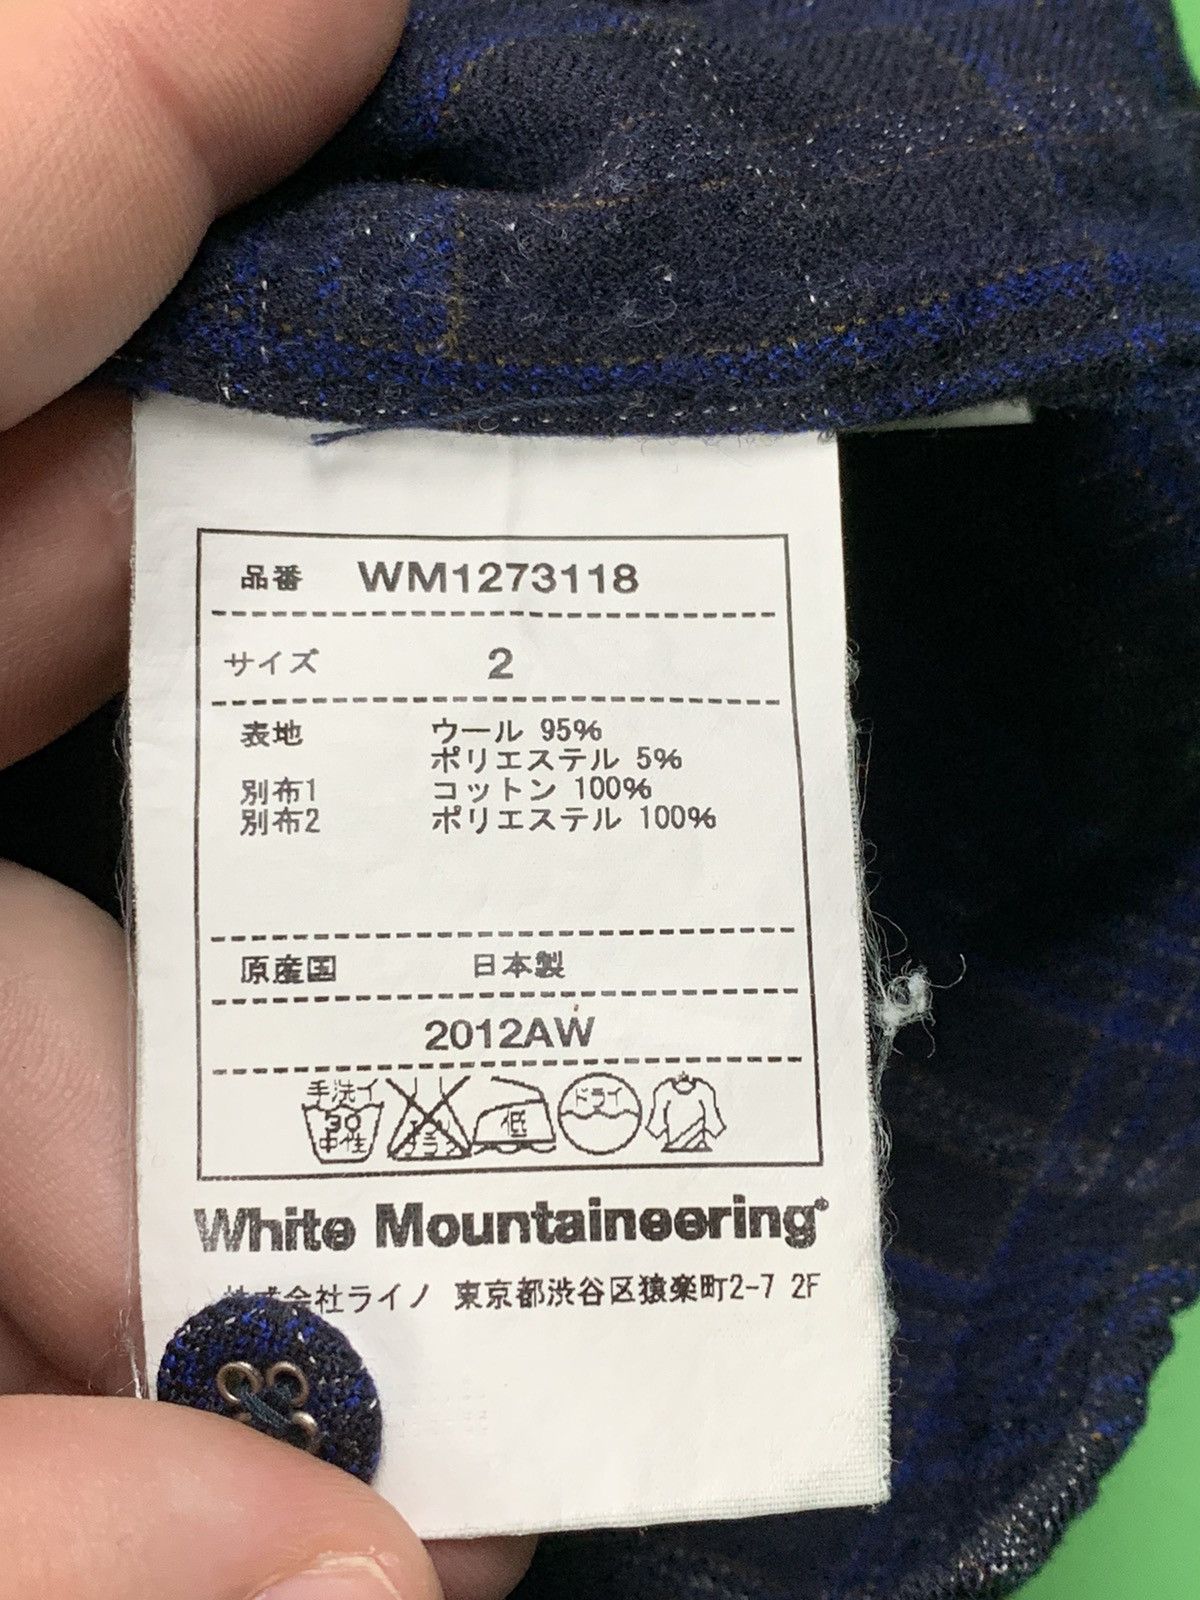 White Mountaineering White Mountaineering AW 12 Wool Overshirt made in Japan Size US S / EU 44-46 / 1 - 9 Thumbnail